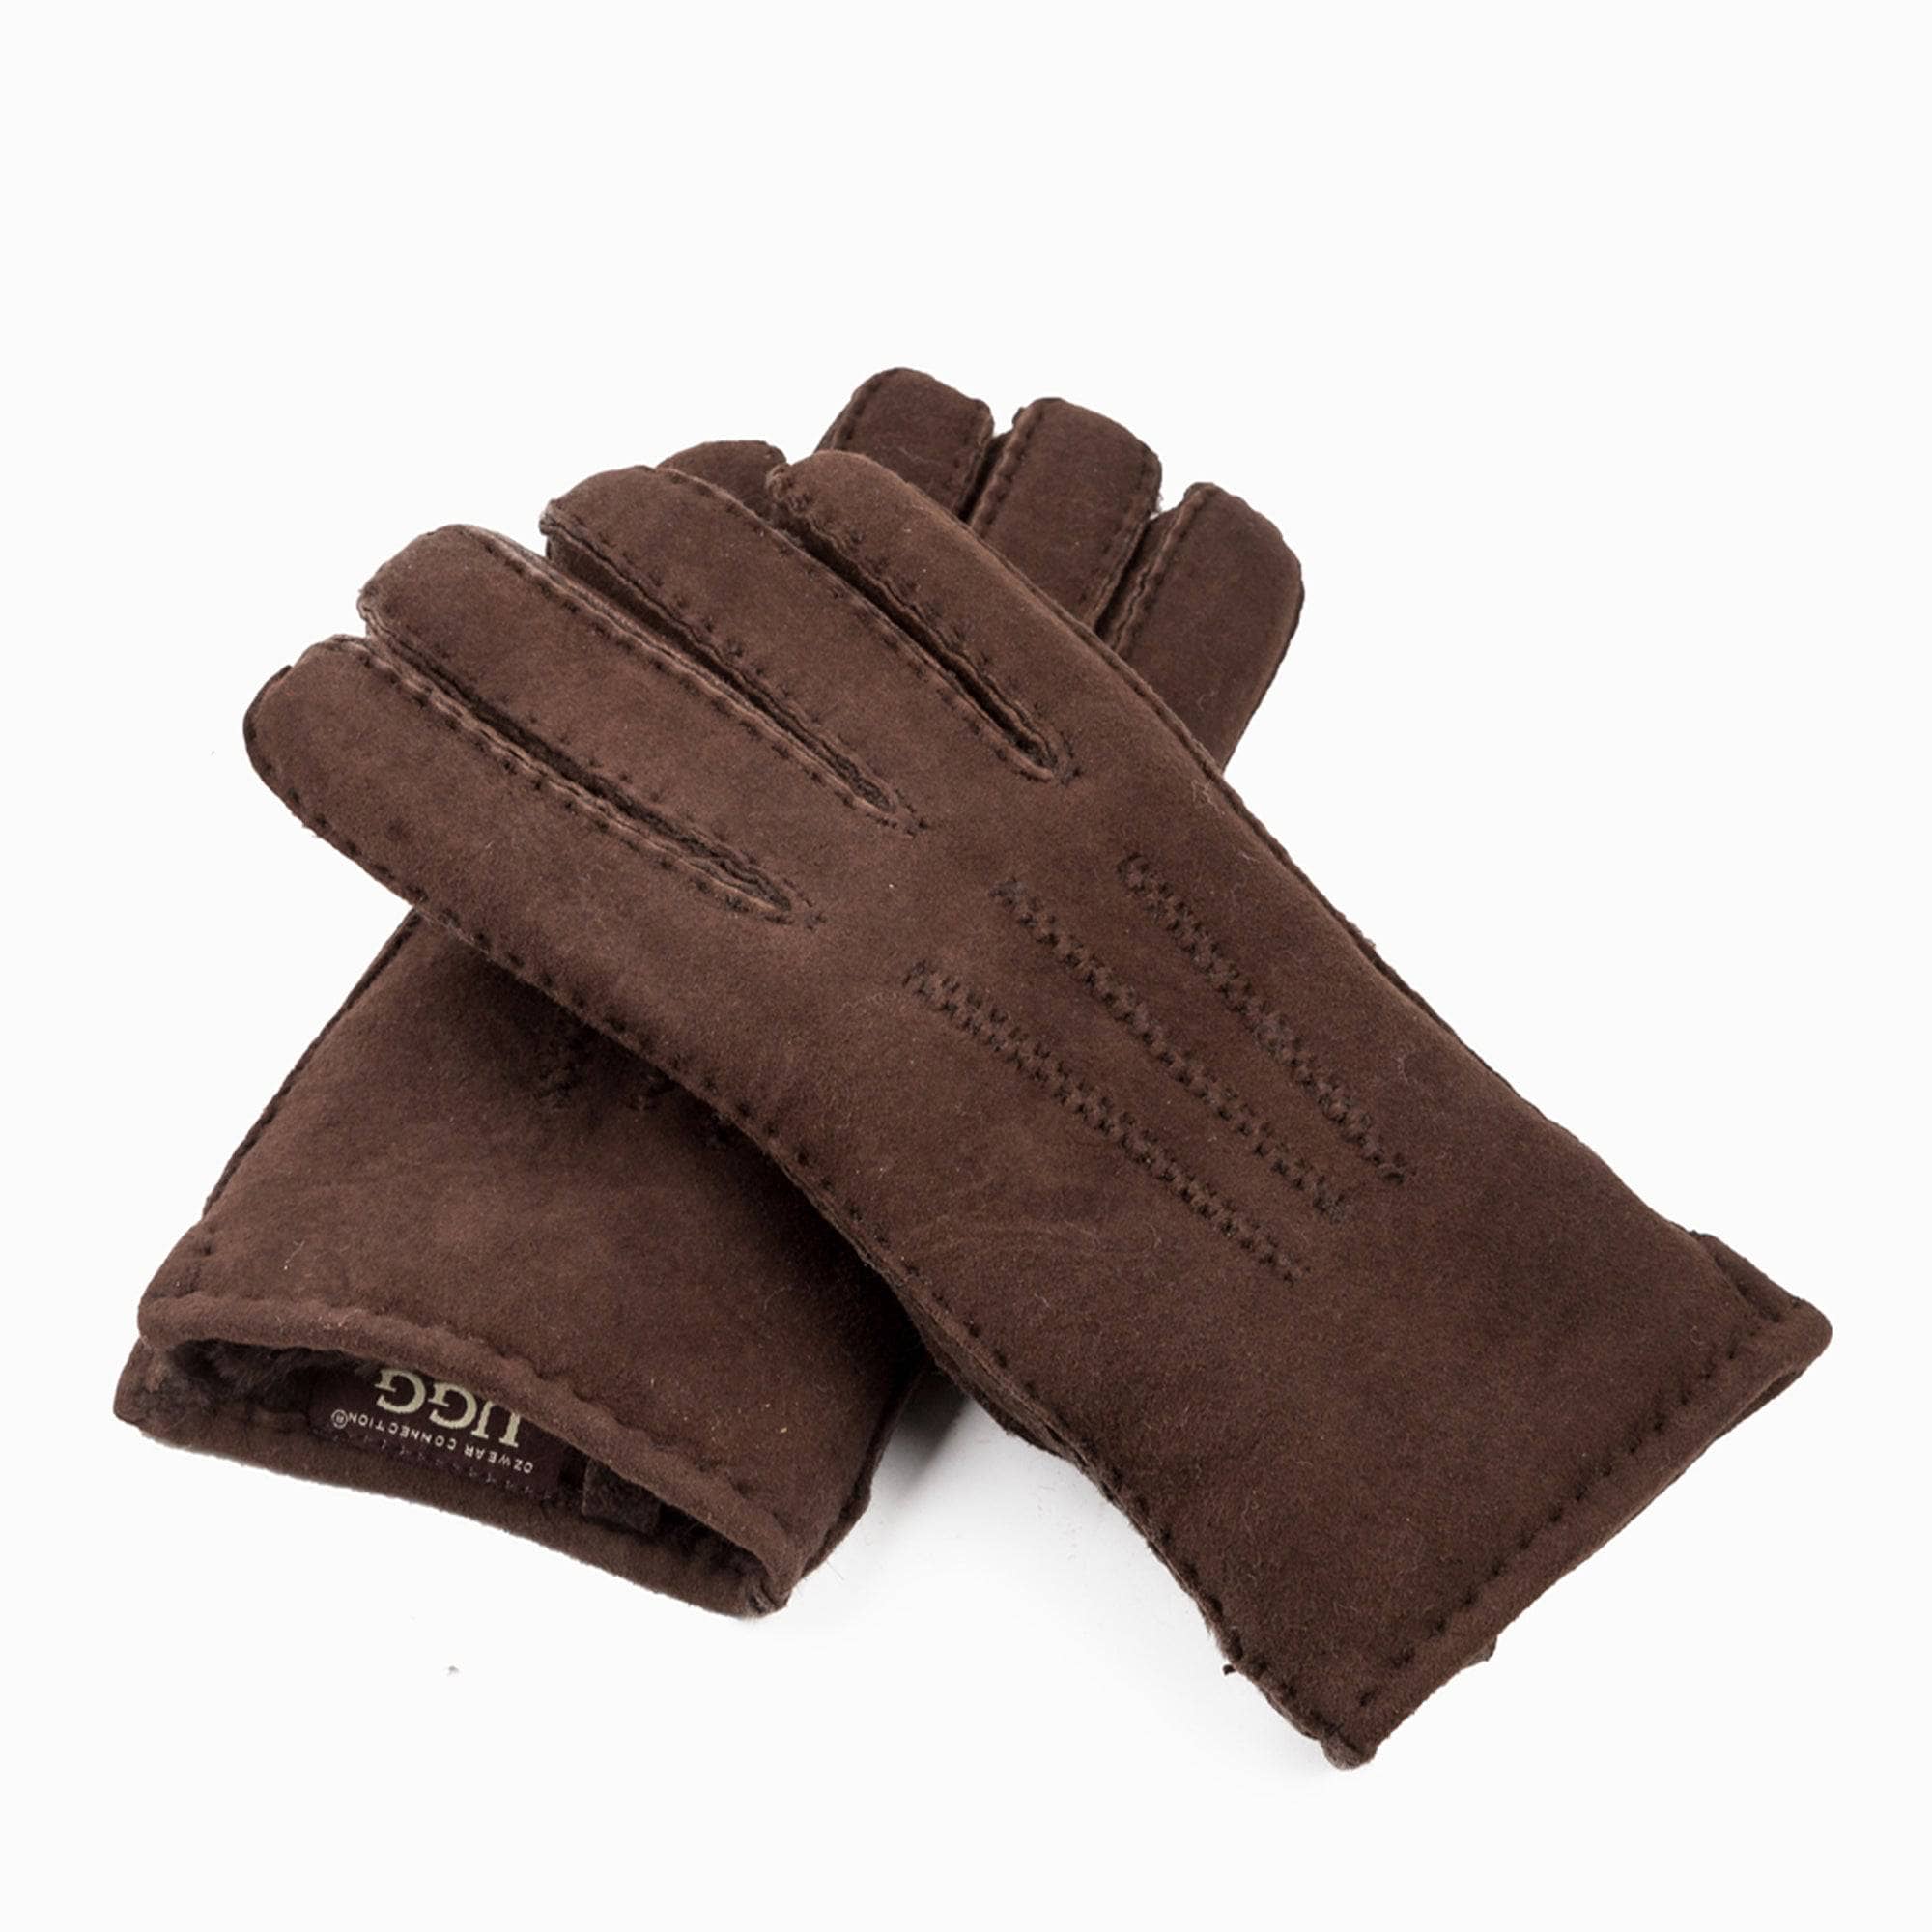  - UGG Premium Men's Sheepskin Gloves - Original UGG Australia Classic